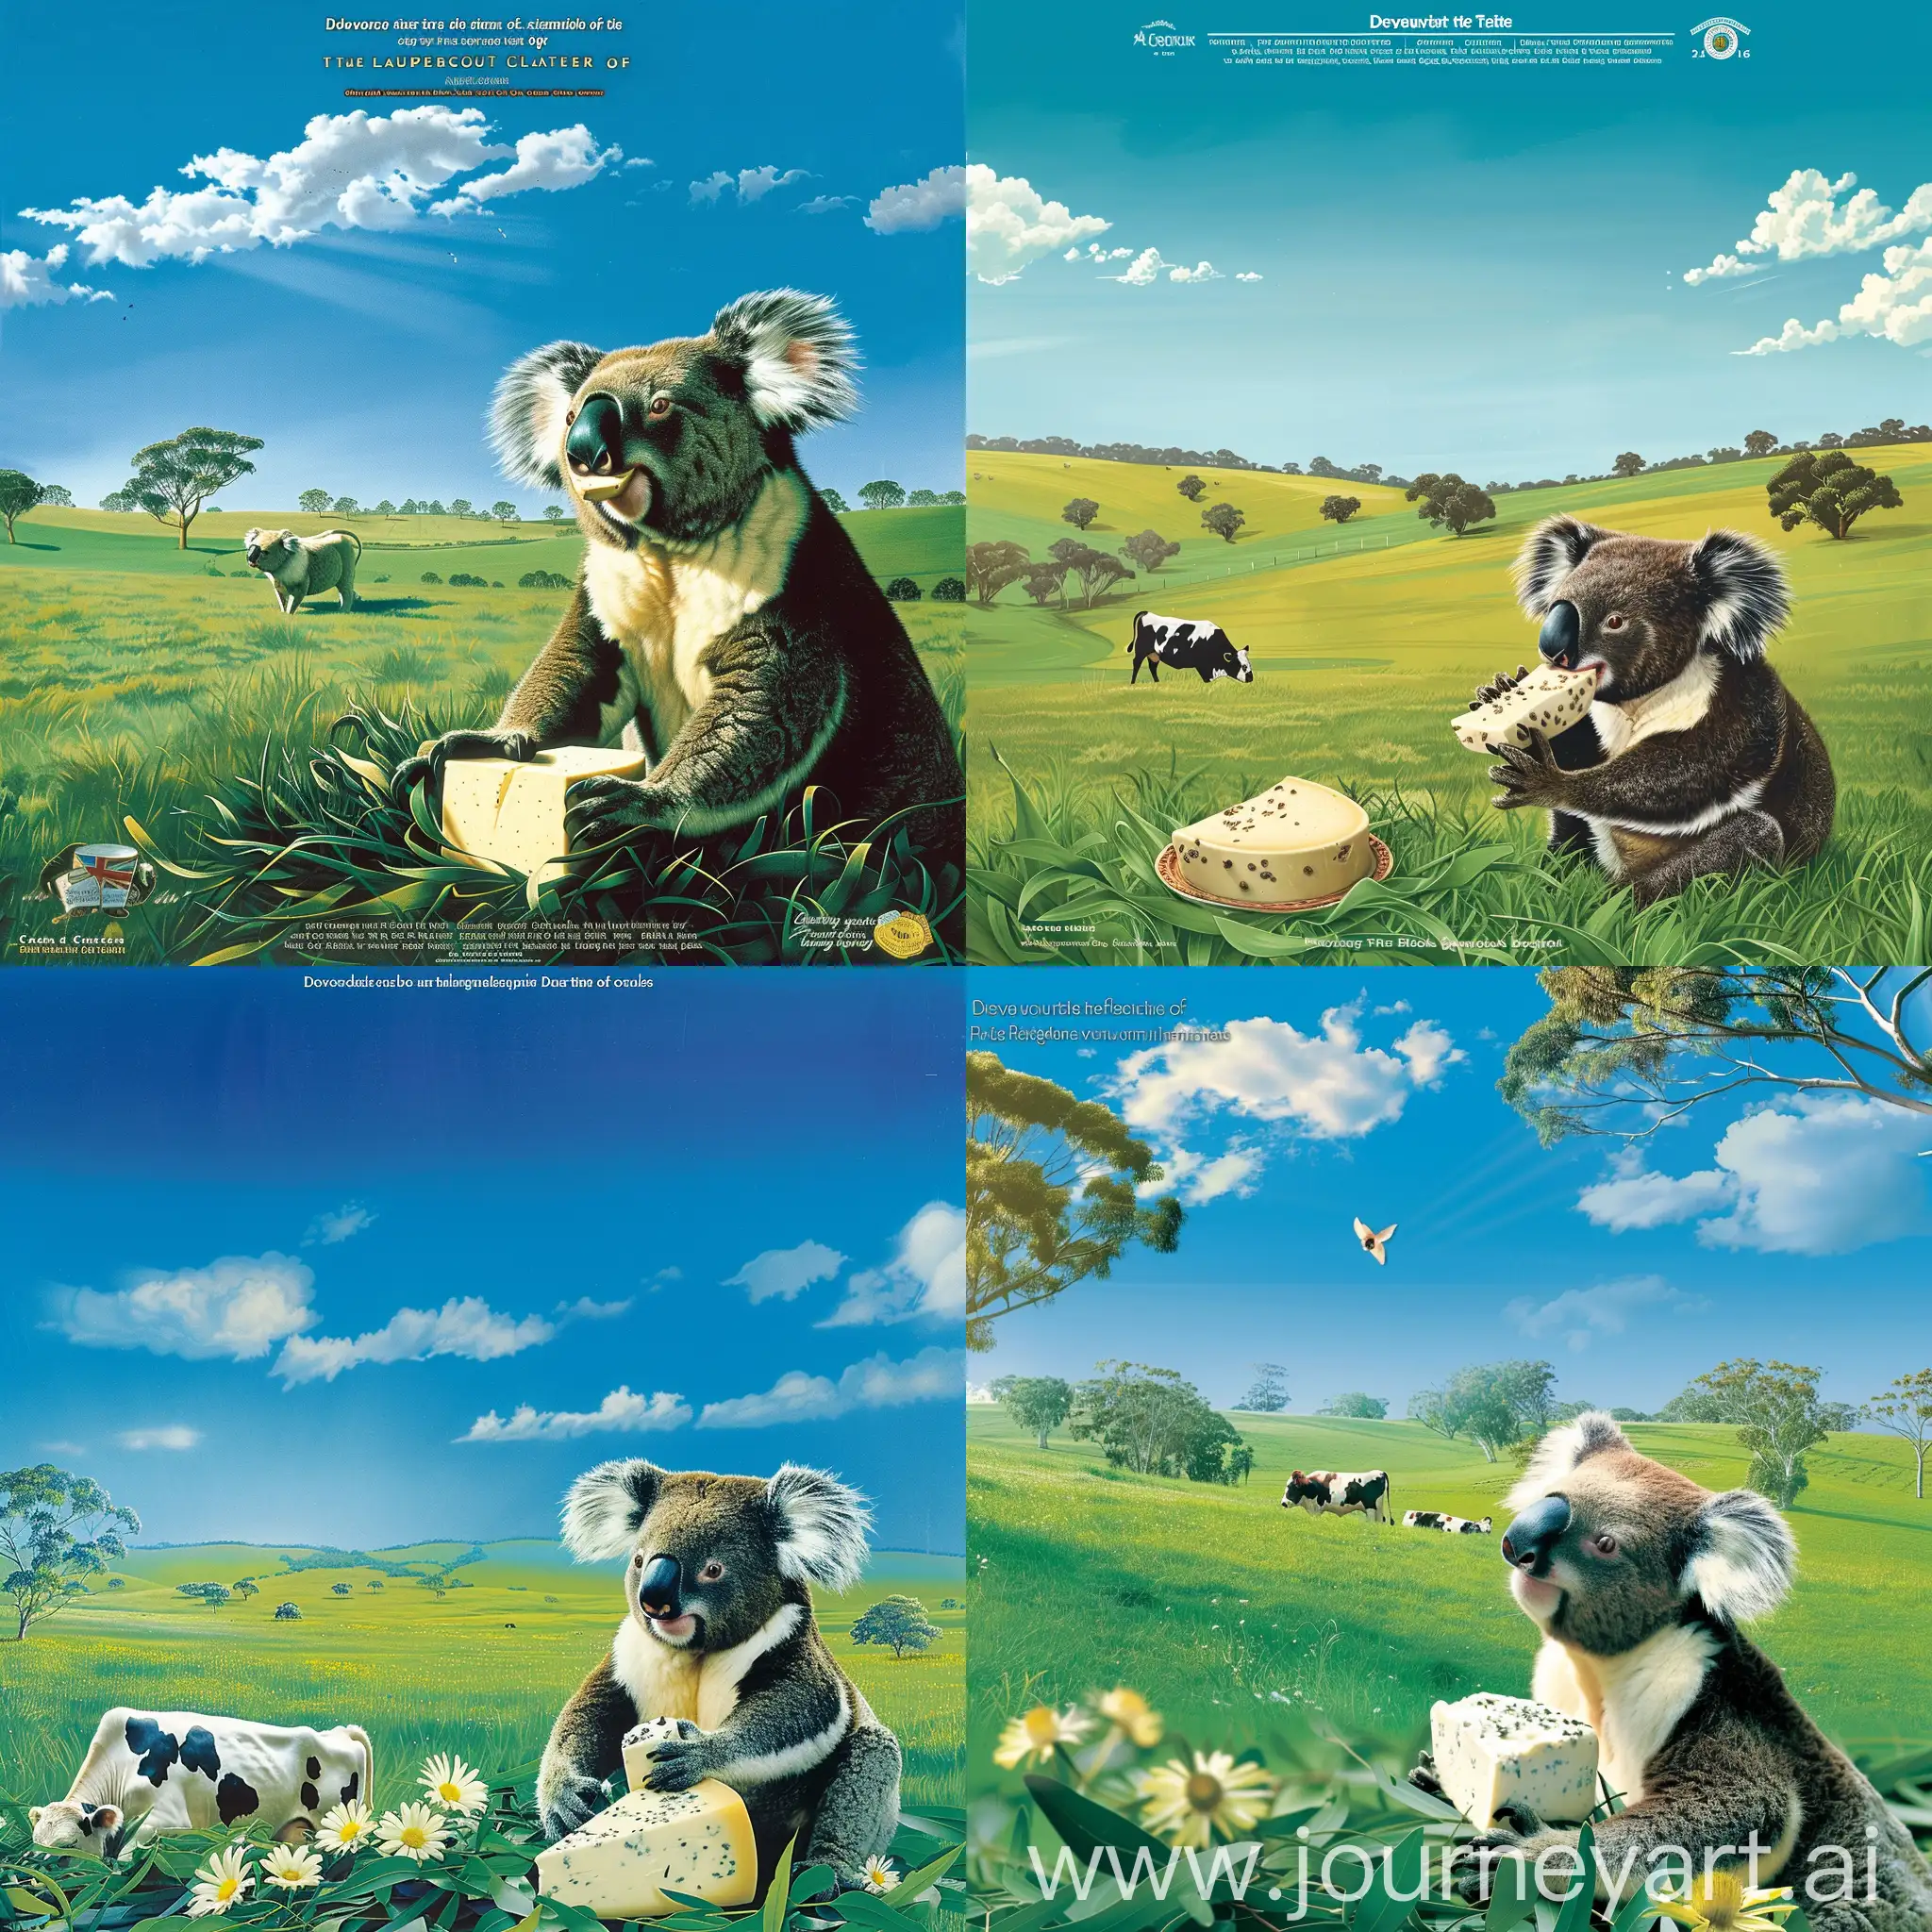 Explore-Australias-Rich-Dairy-Delights-Holstein-Cow-and-Koala-Enjoy-Premium-Cheese